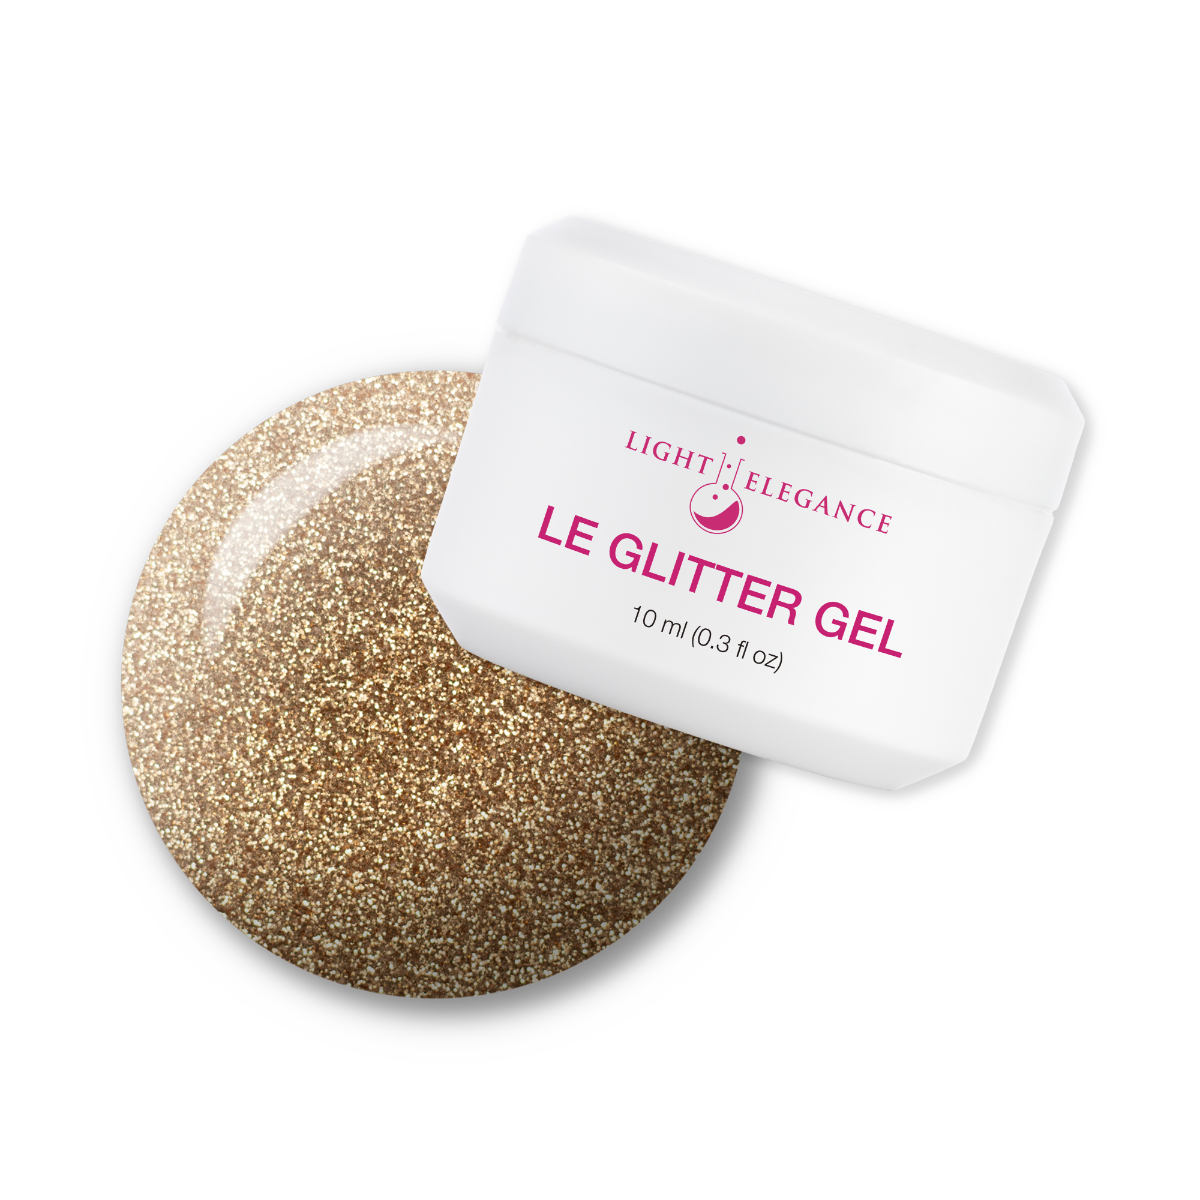 Light Elegance Glitter Gel - Blondie :: New Packaging - Creata Beauty - Professional Beauty Products